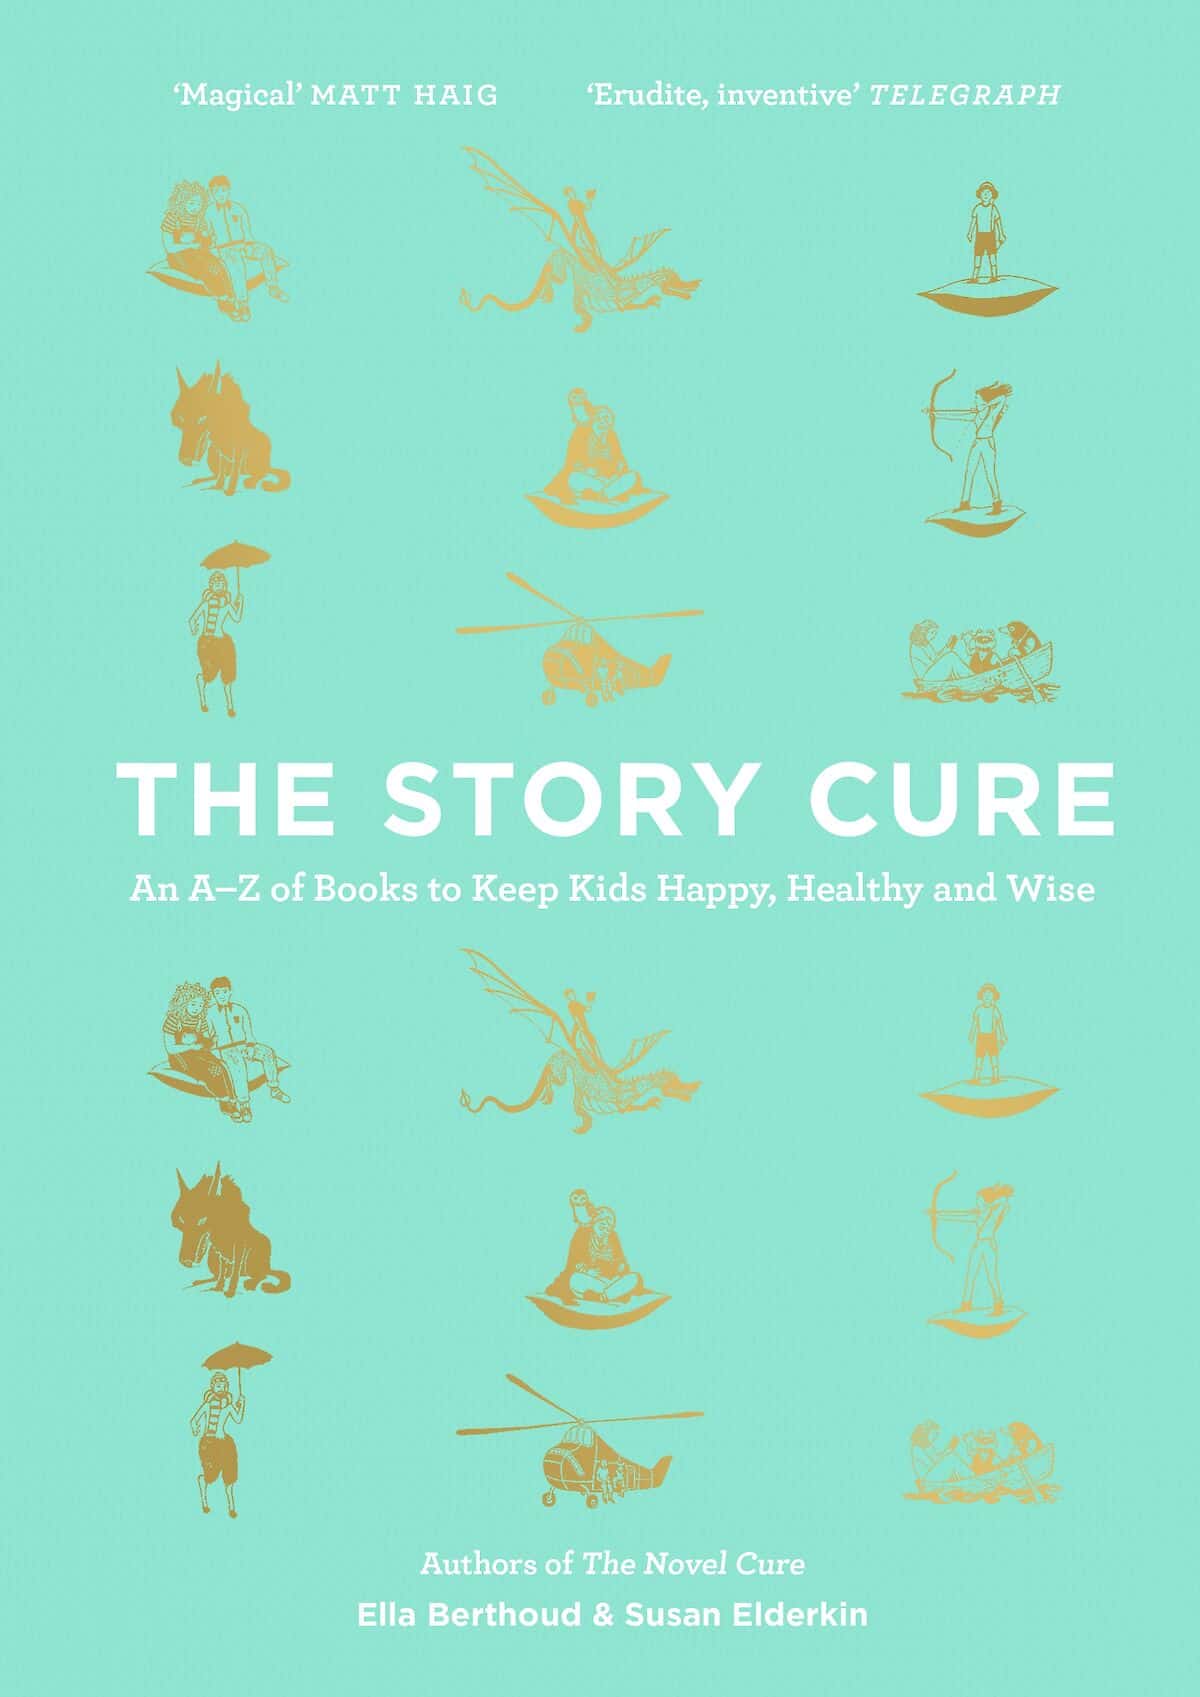 The Story Cure Author Name Ella Berthoud and Susan Elderkin